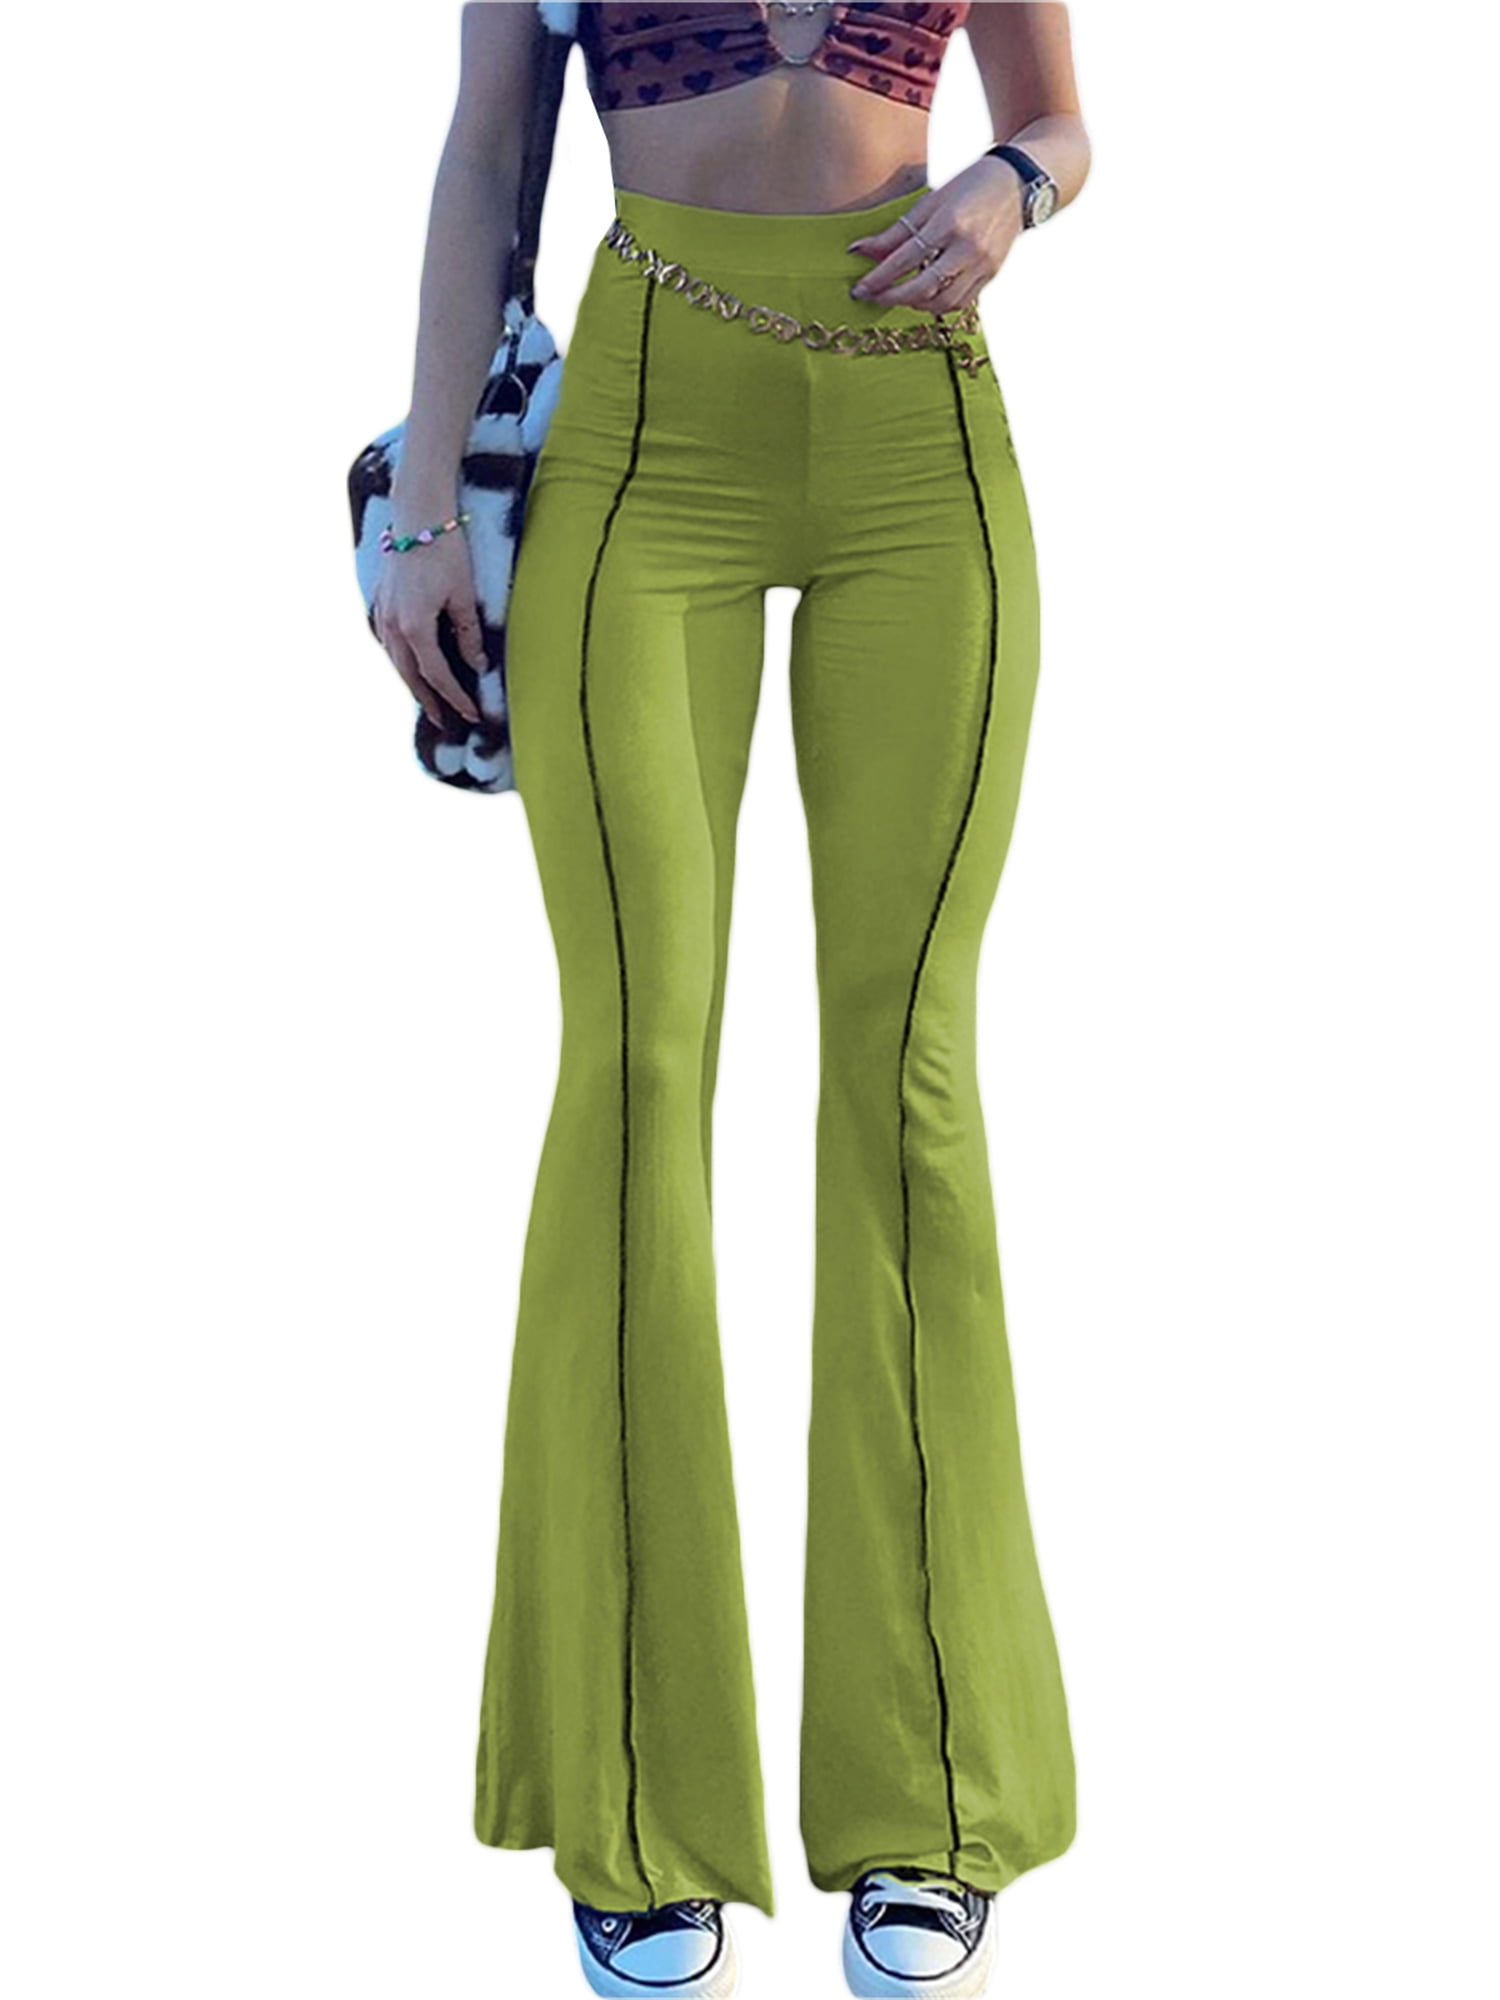 1970s Vintage 3 Piece Pant Set Floral Metallic Women's S/M Wide leg Pants Bell Bottoms High Rise Tank top & Shirt